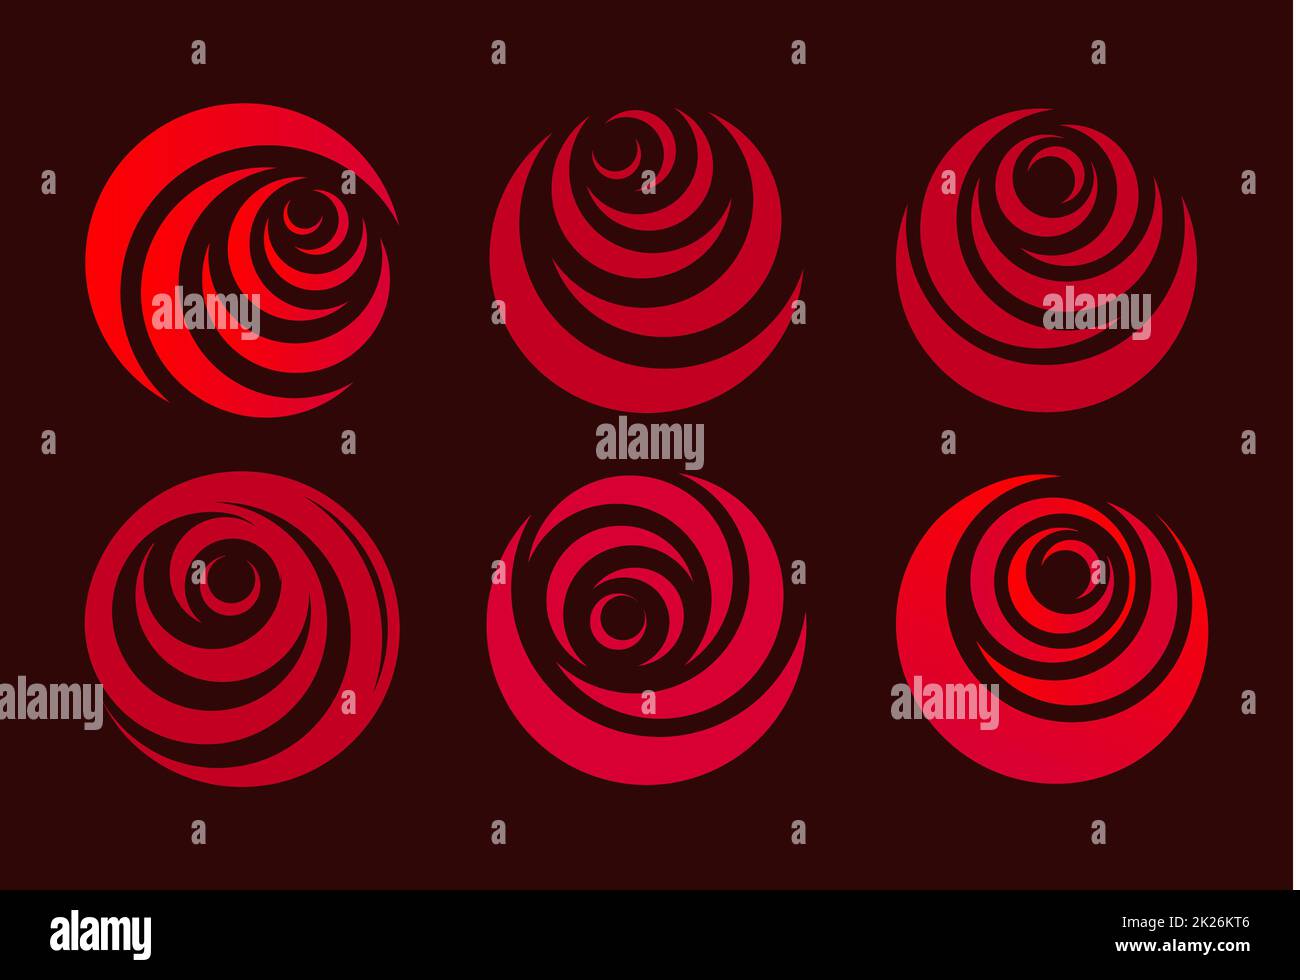 Red rose, flower abstract stylized petal. Circle shape, logo set. Love symbol. Stock Photo